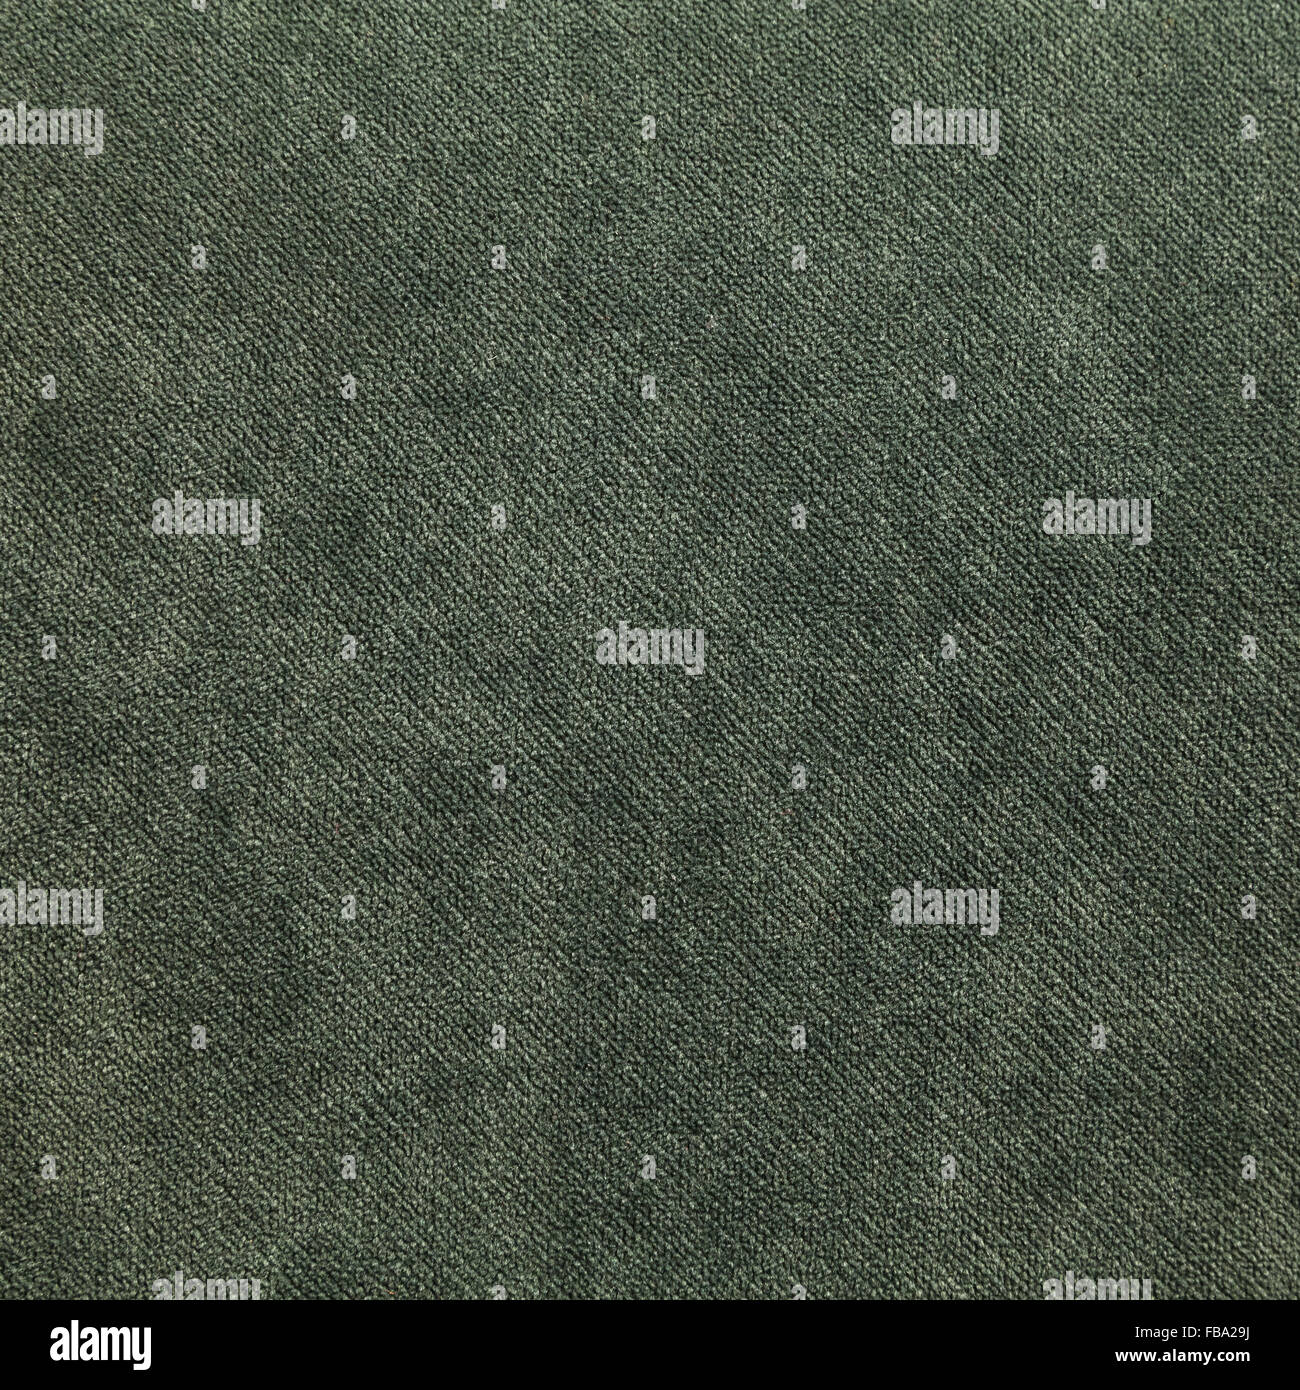 Dark green fabric pattern, square background photo texture Stock Photo